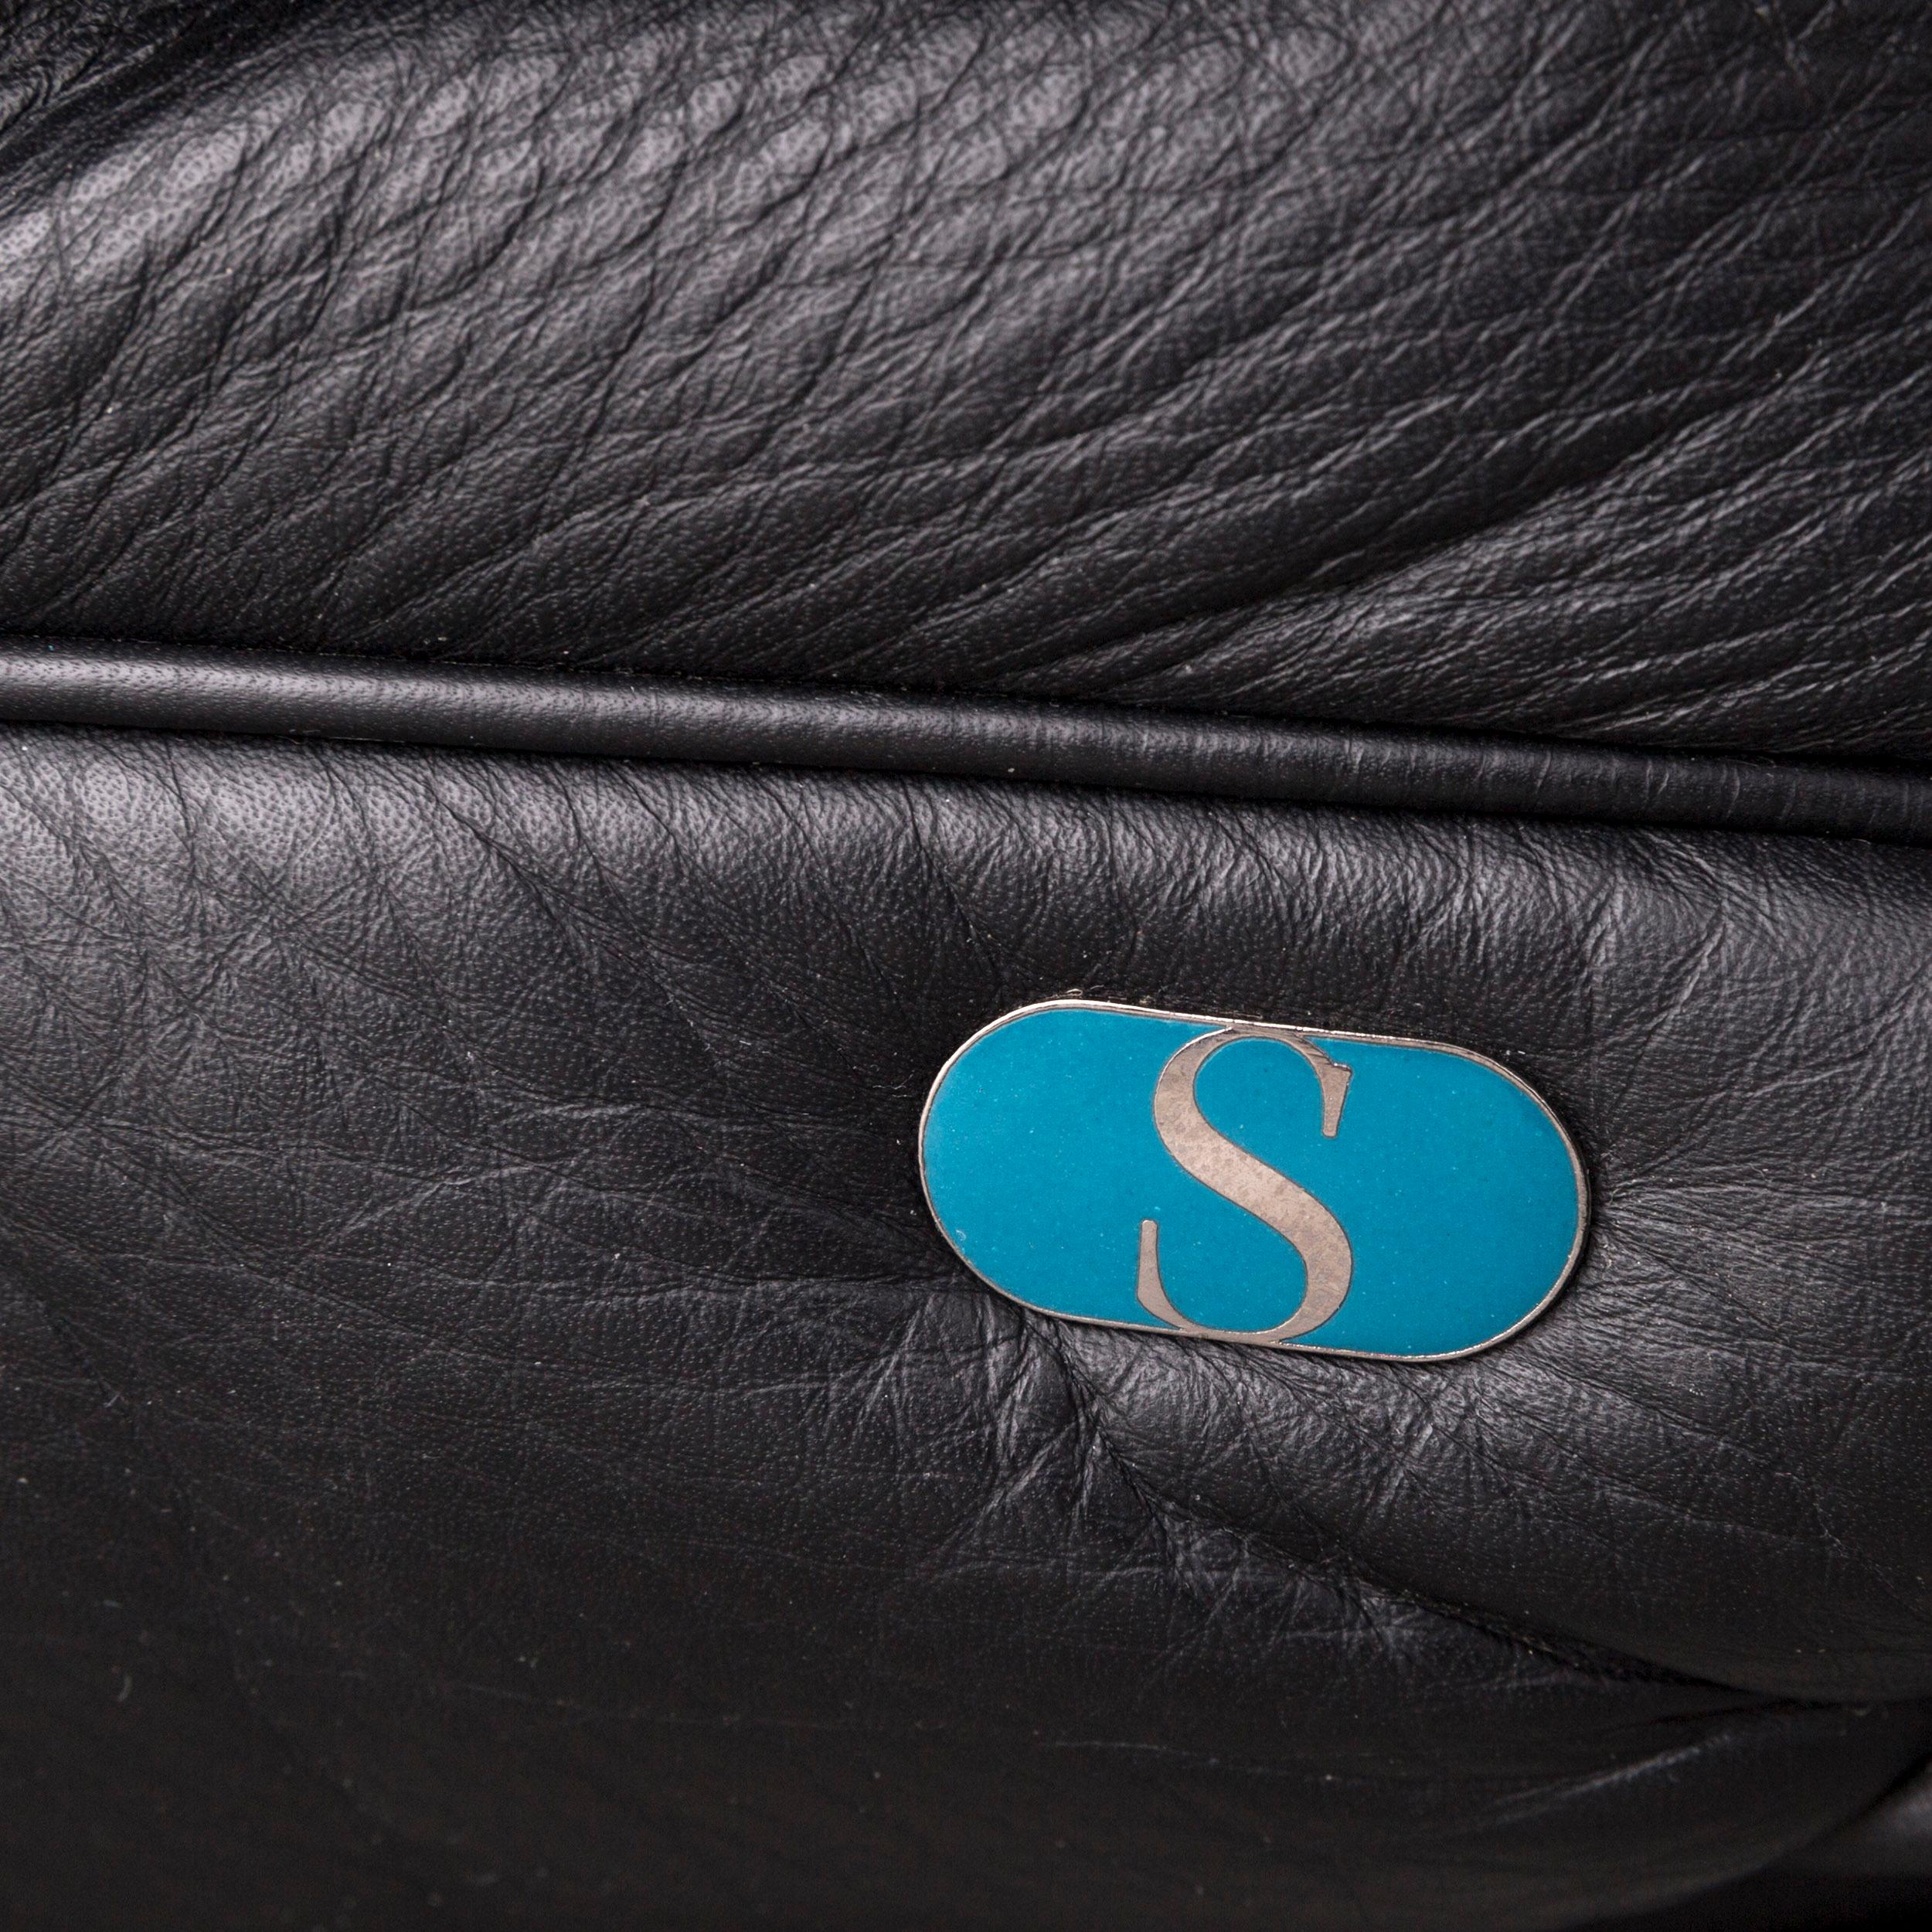 De Sede DS 140 Designer Leather Sofa Black Three-Seat Function Modern For Sale 2